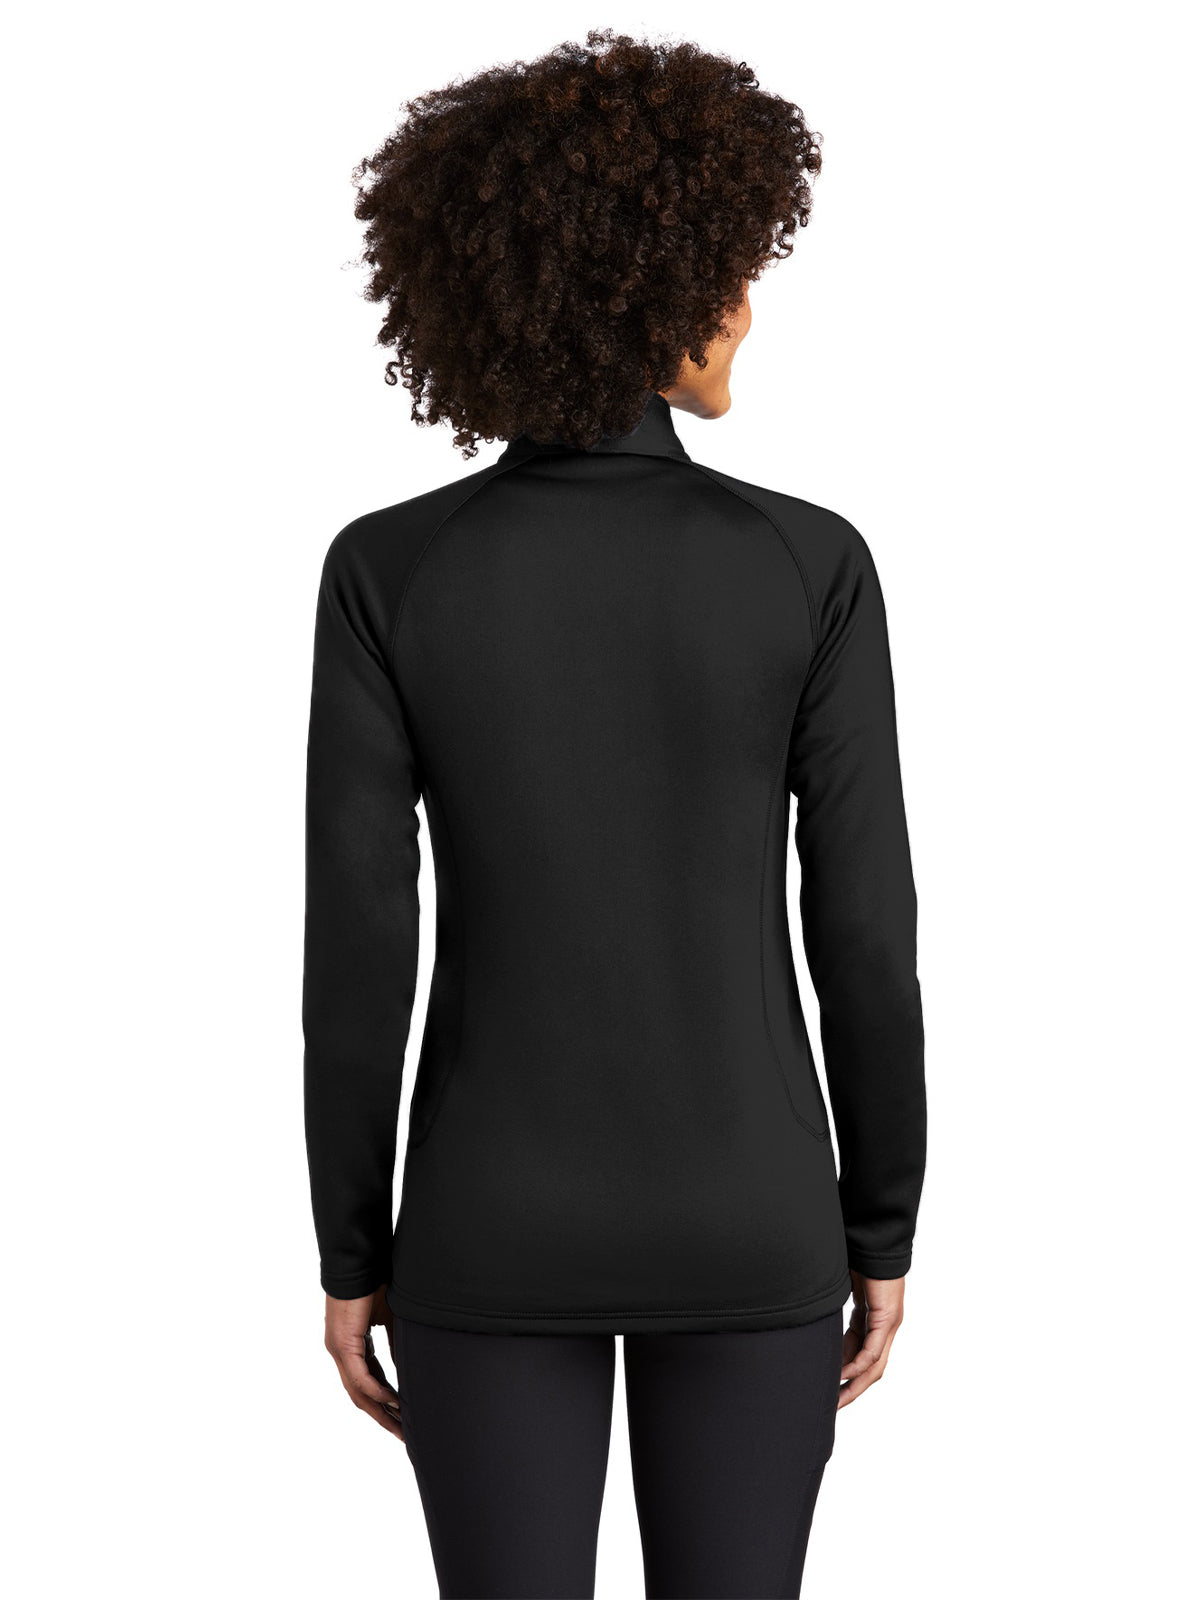 Women's Smooth Fleece Full Zip Jacket - EB247 - Black